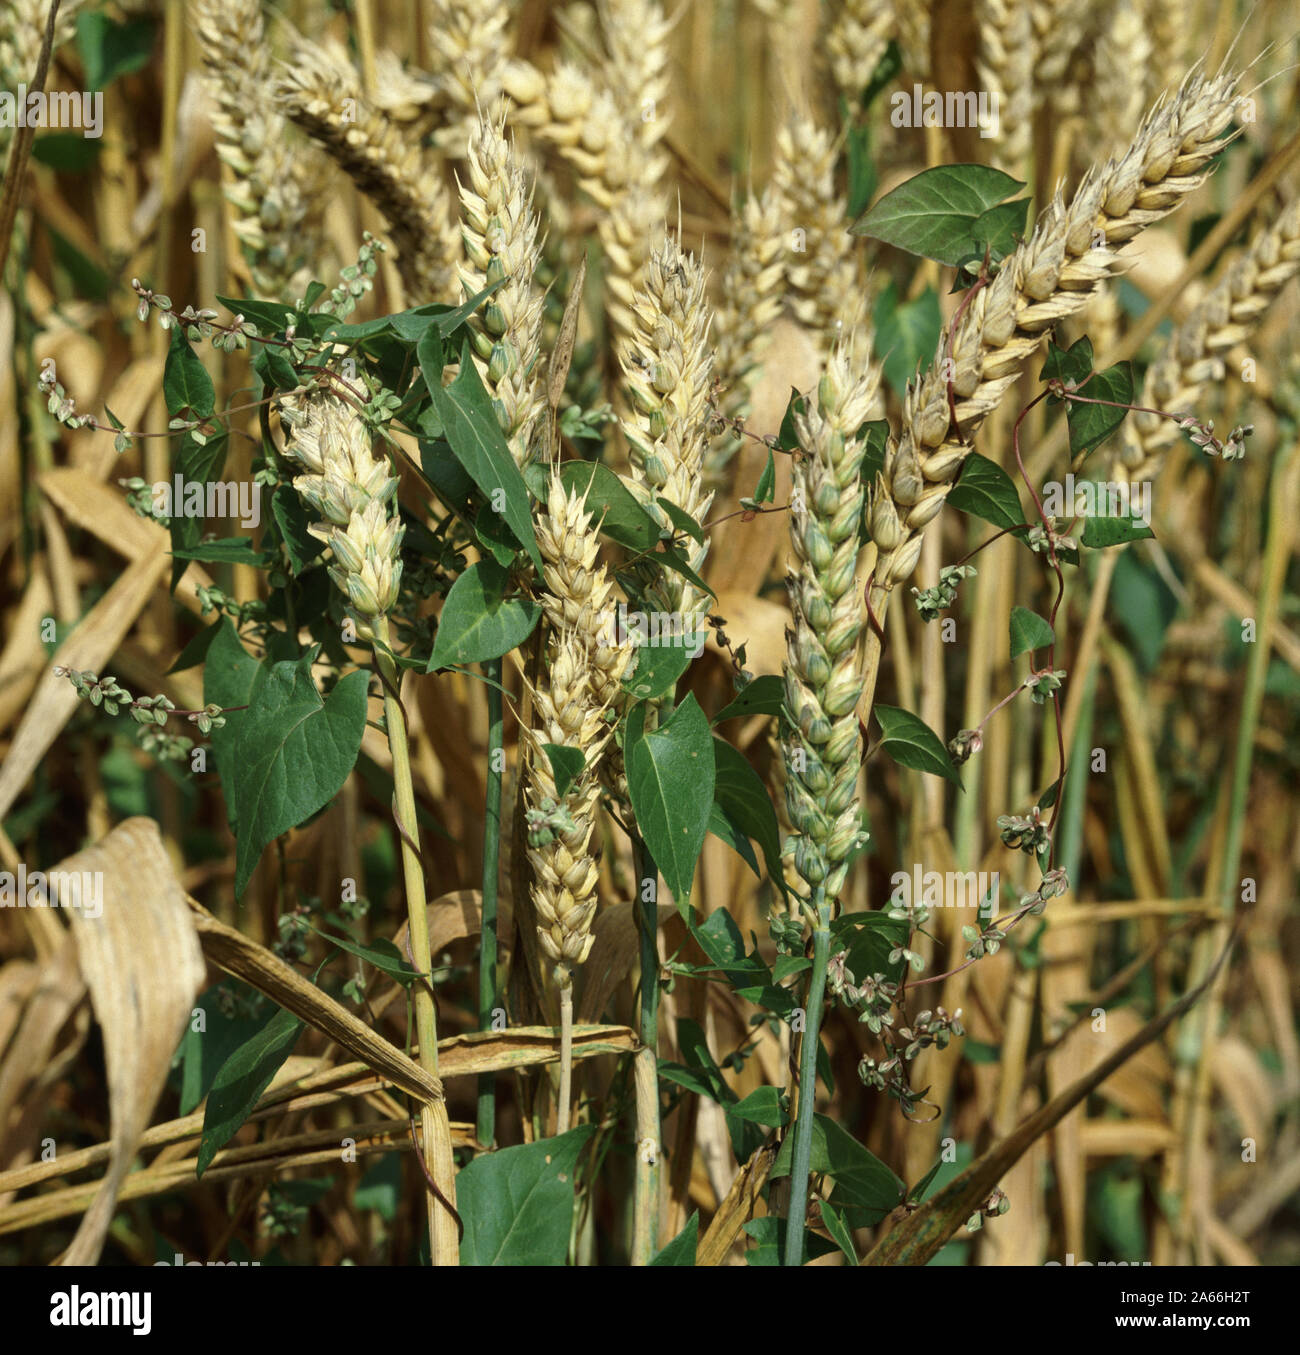 Black bindweed ( Fallopia convolvulus) weeds climbing through a ripening ripe wheat crop close to harvest Stock Photo